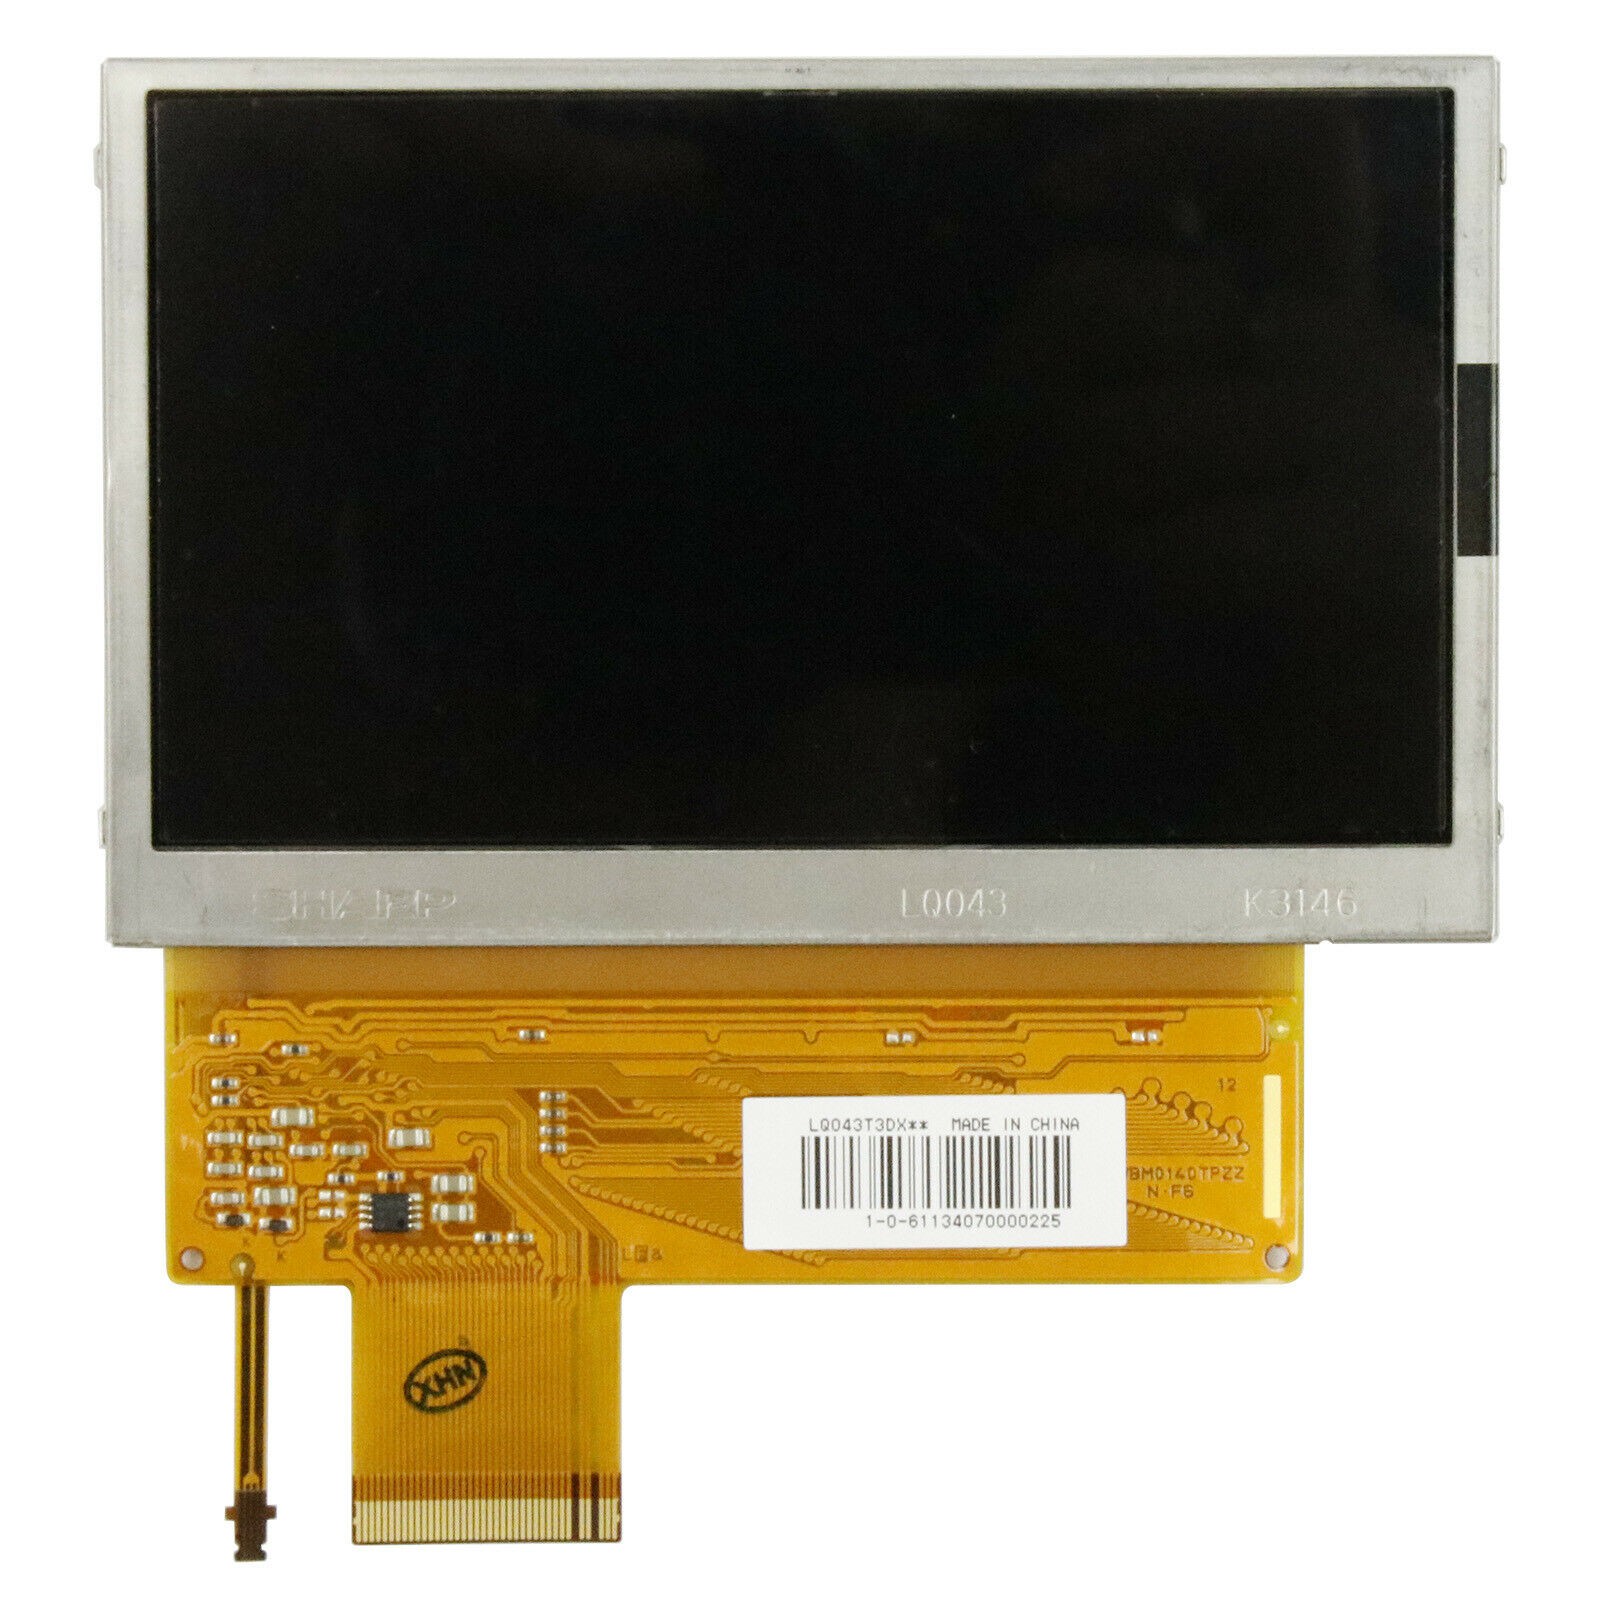 LCD vervangingsscherm voor de PSP 1000 - Playstation Portable Hardware